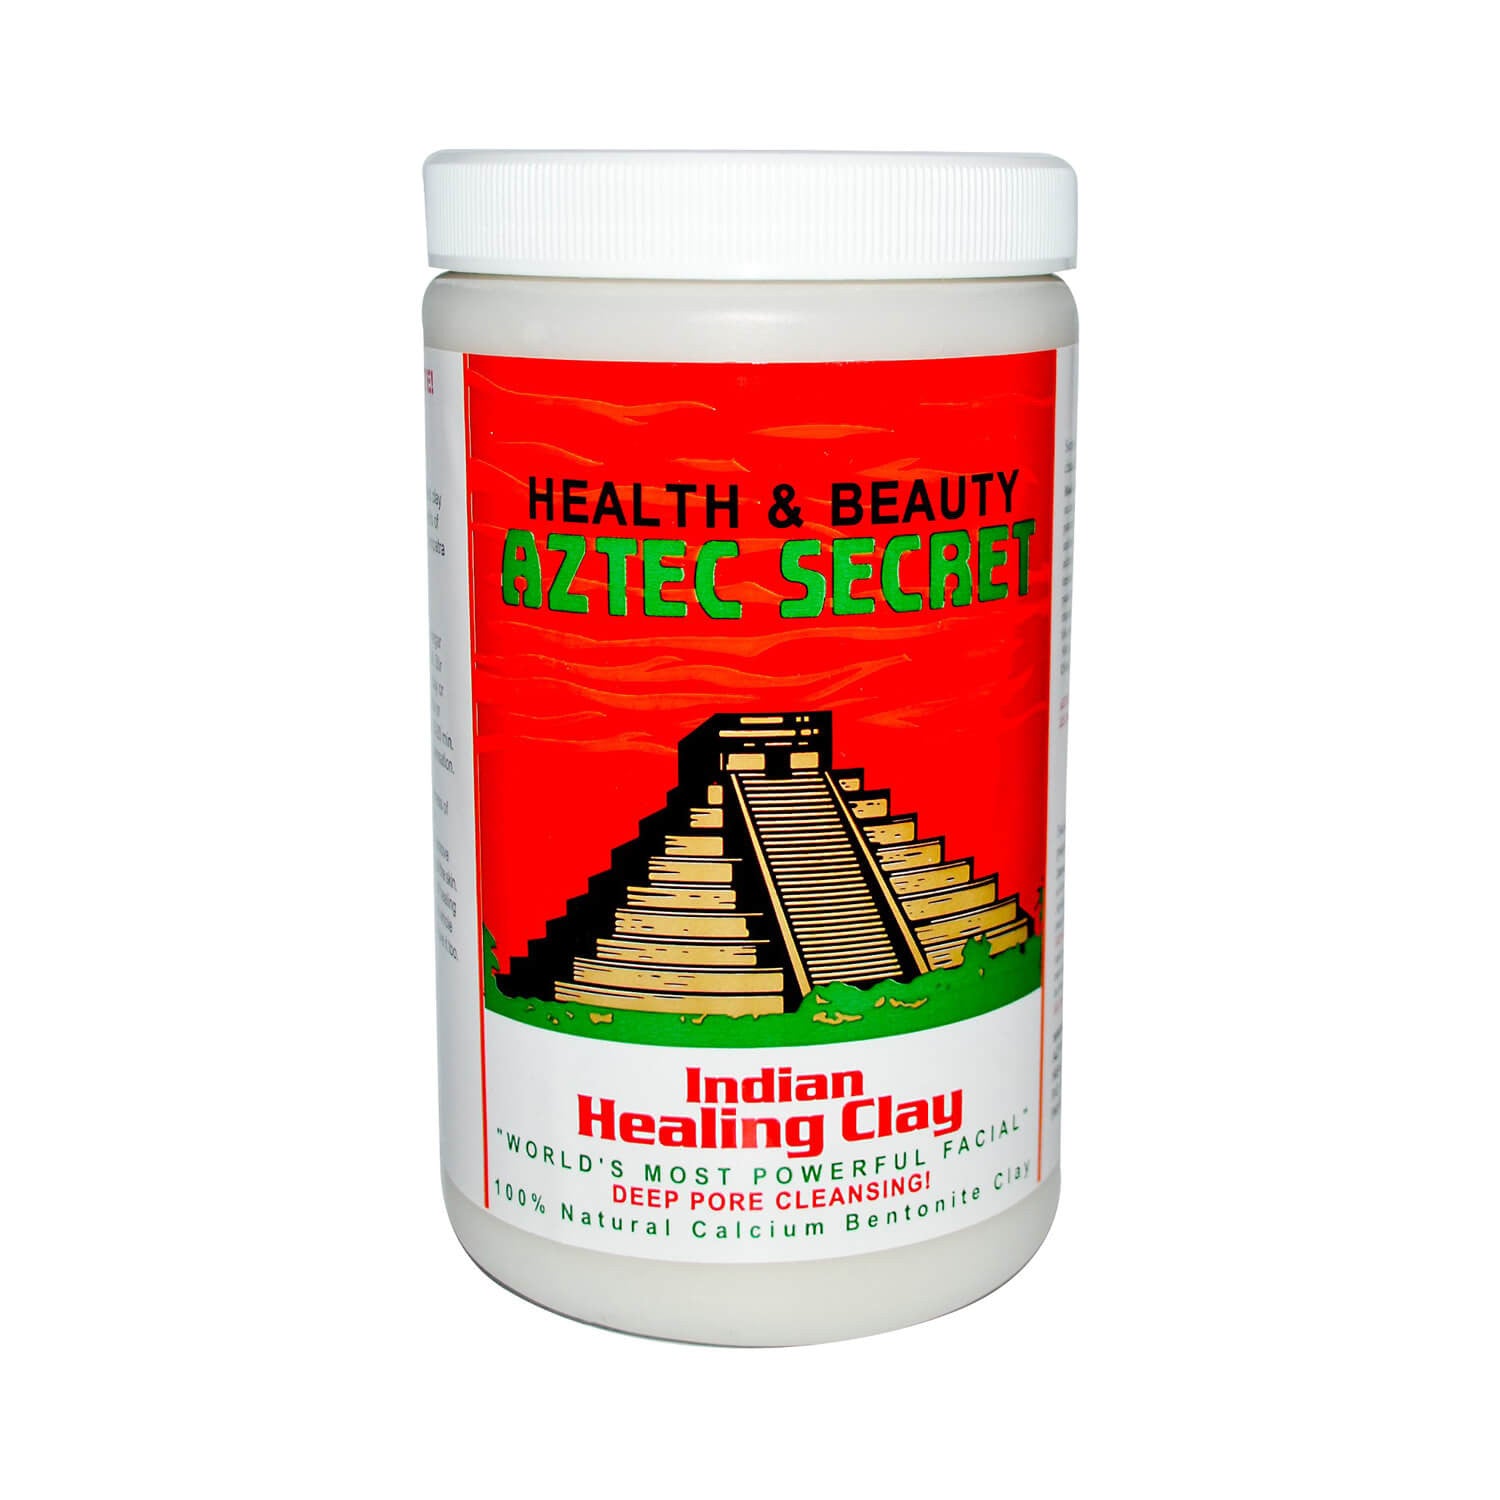 Aztec Secret Indian Healing Clay Deep Pore Cleansing 2 lb (908g)